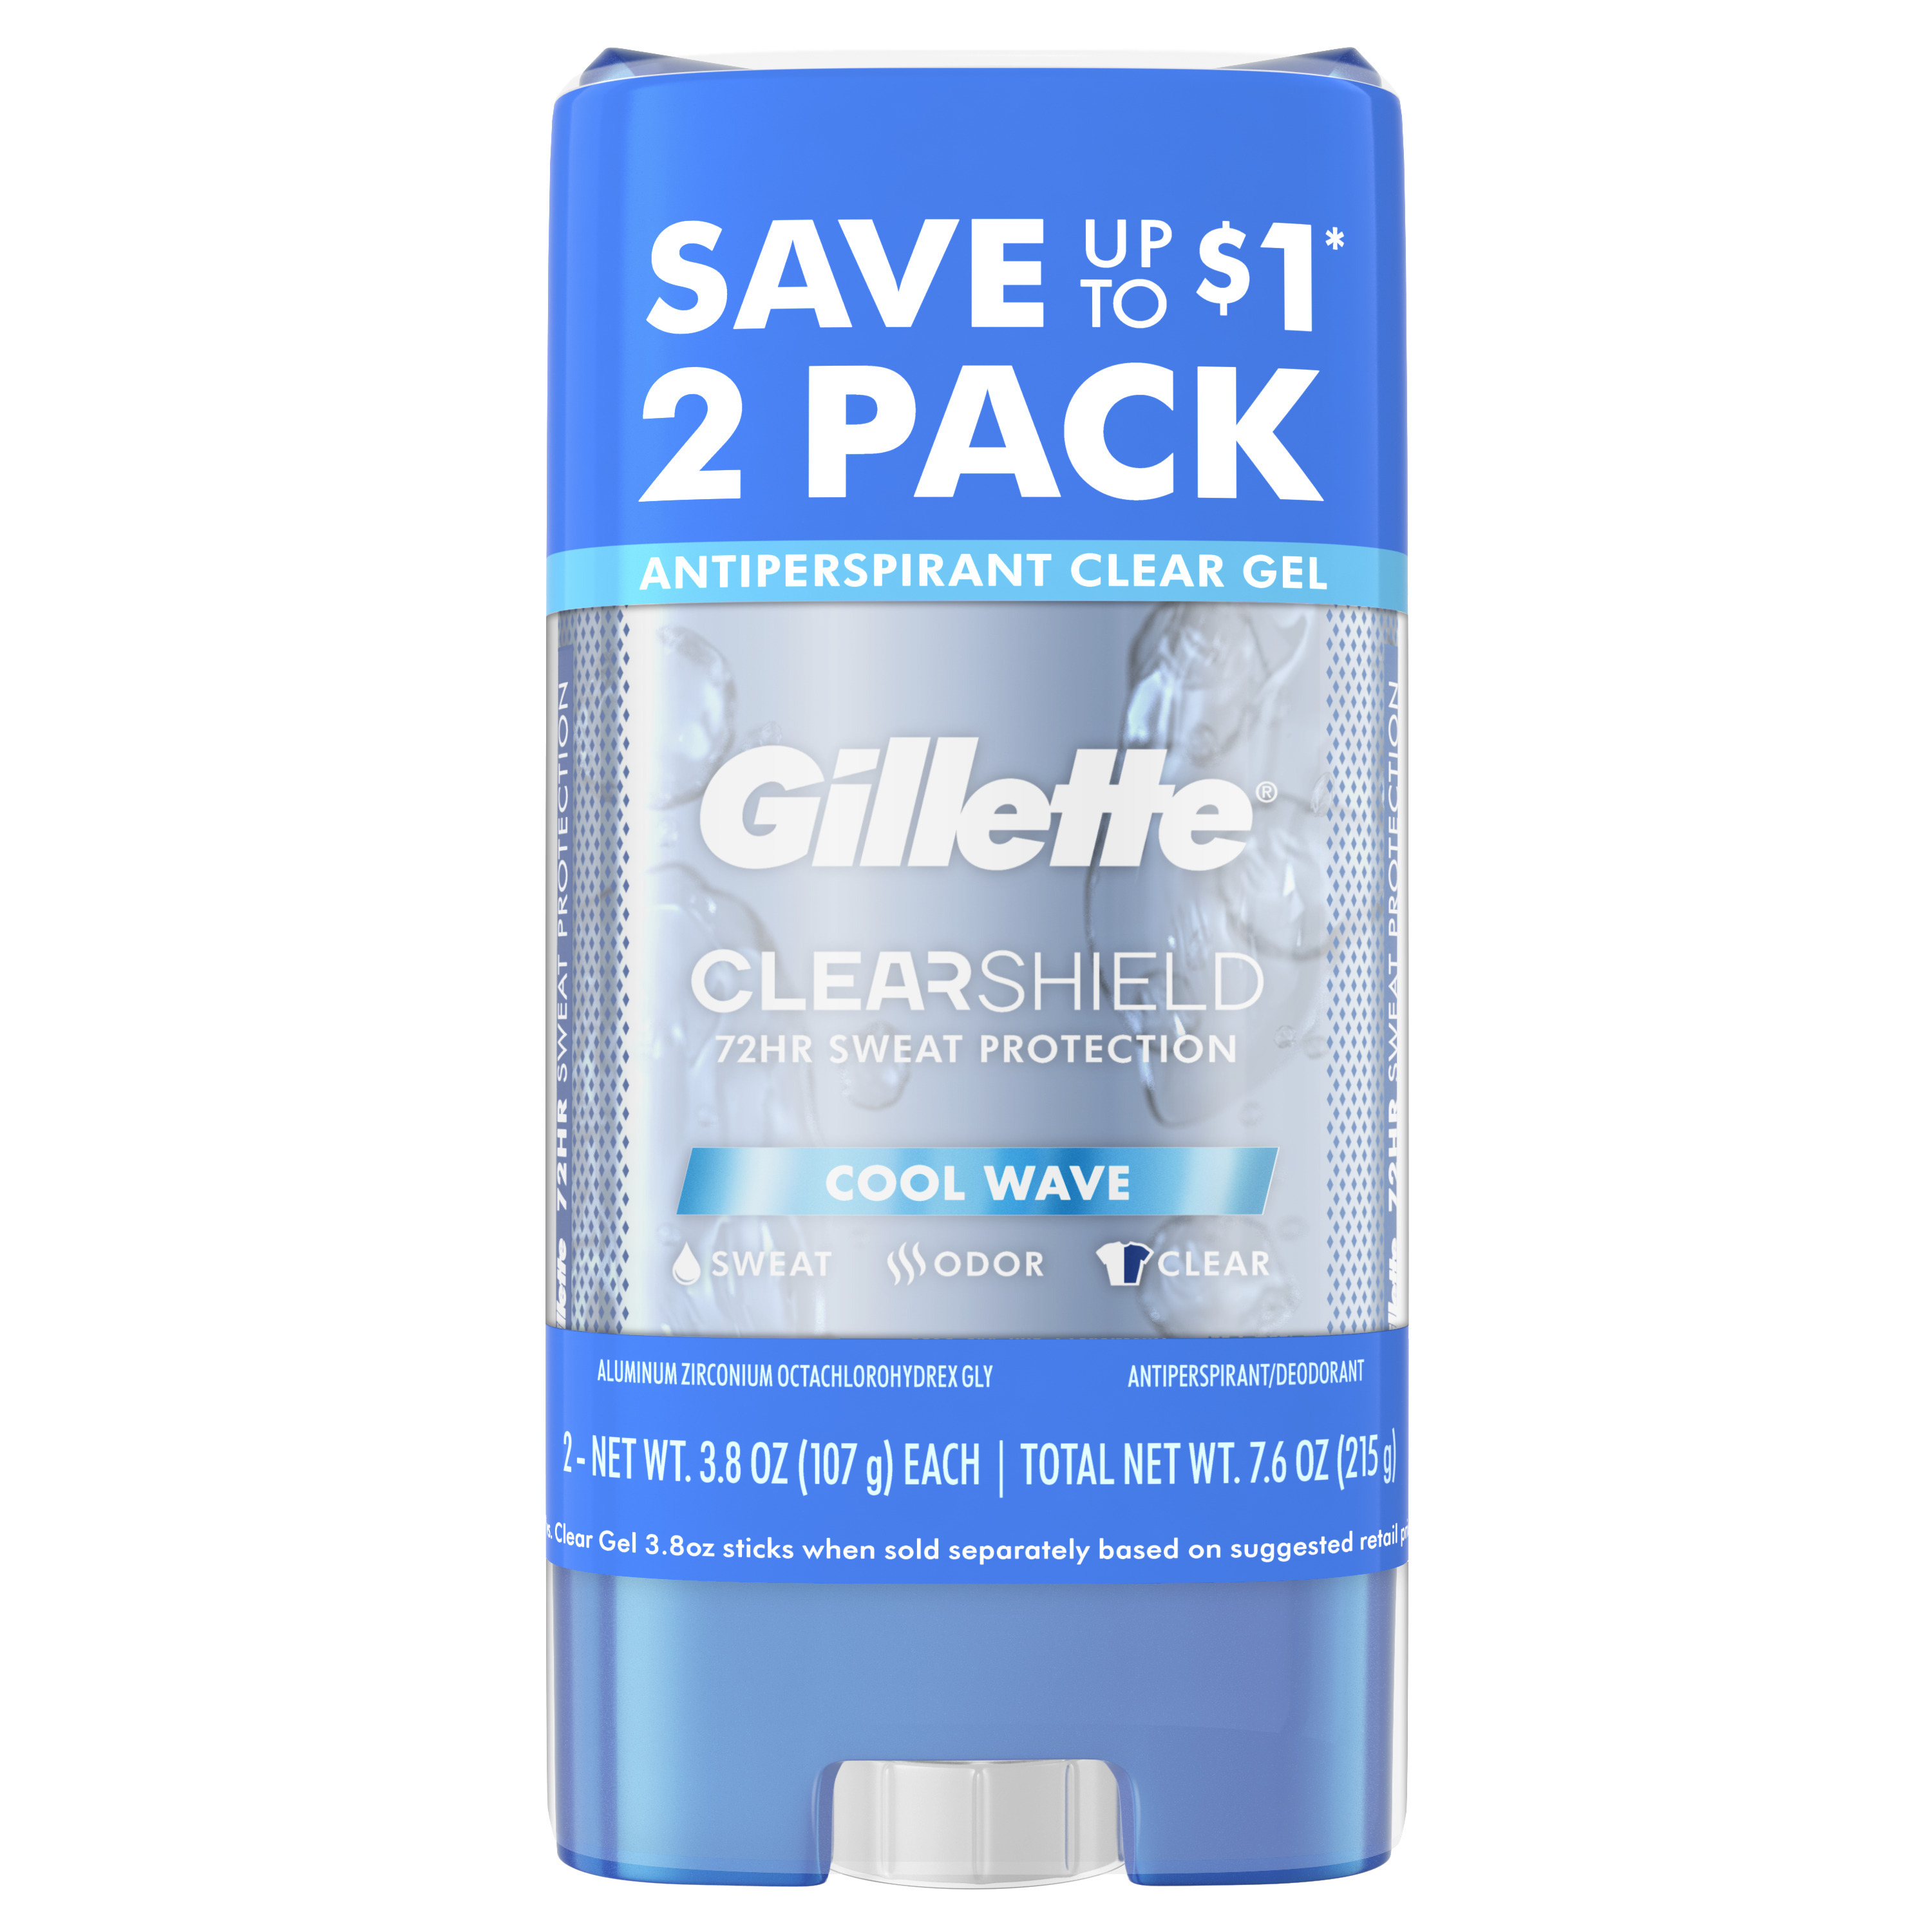 Gillette Antiperspirant Deodorant for Men, Clear Gel, Cool Wave, Twin Pack, 3.8oz - image 1 of 8